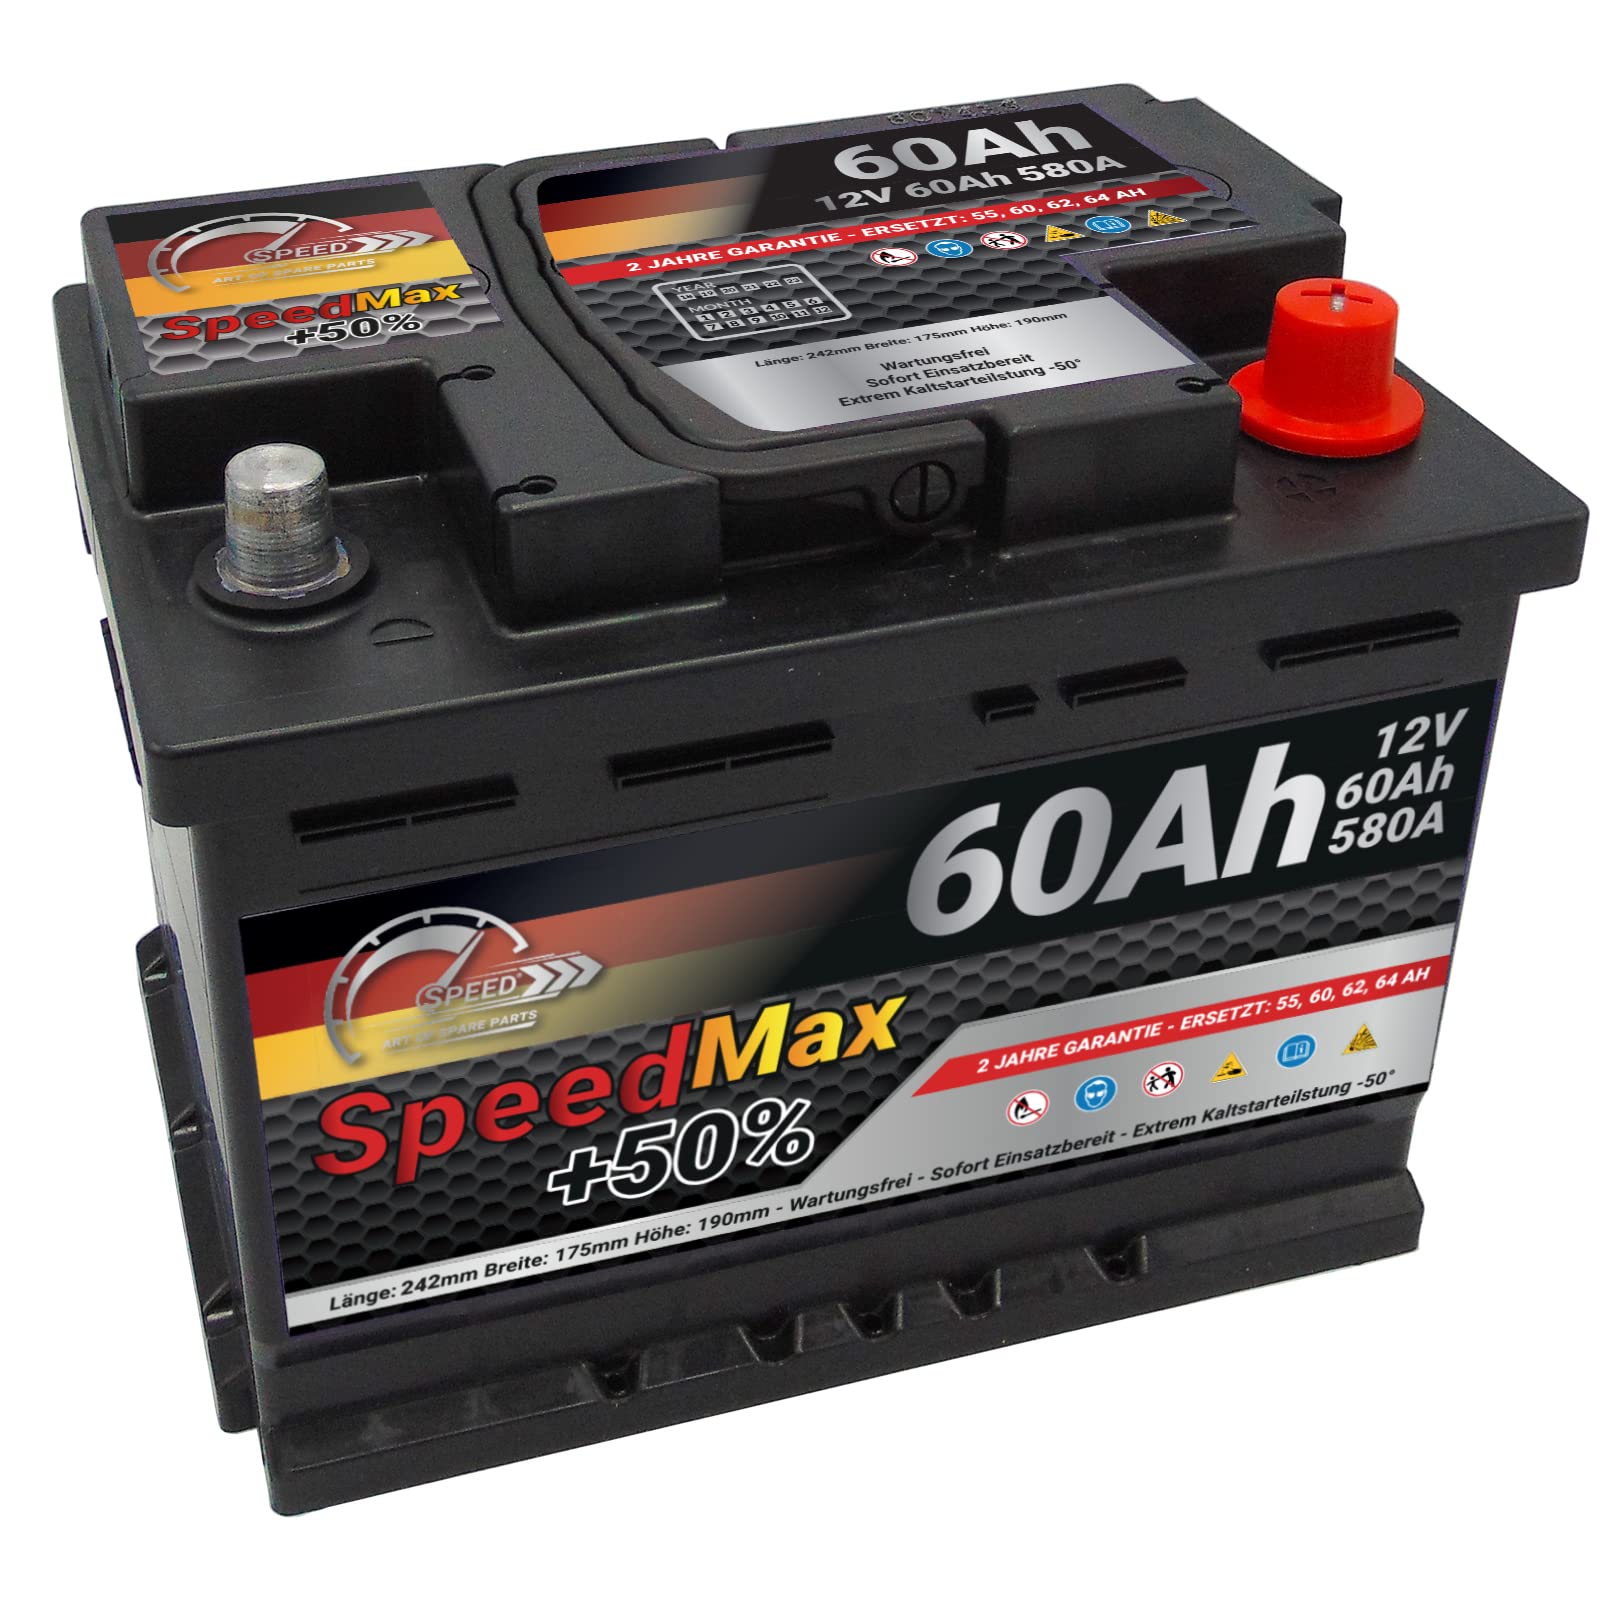 Autobatterie Speed Max (L260MAX) 60Ah 580A 12v ersetzt 55Ah 62Ah 65Ah von SMC